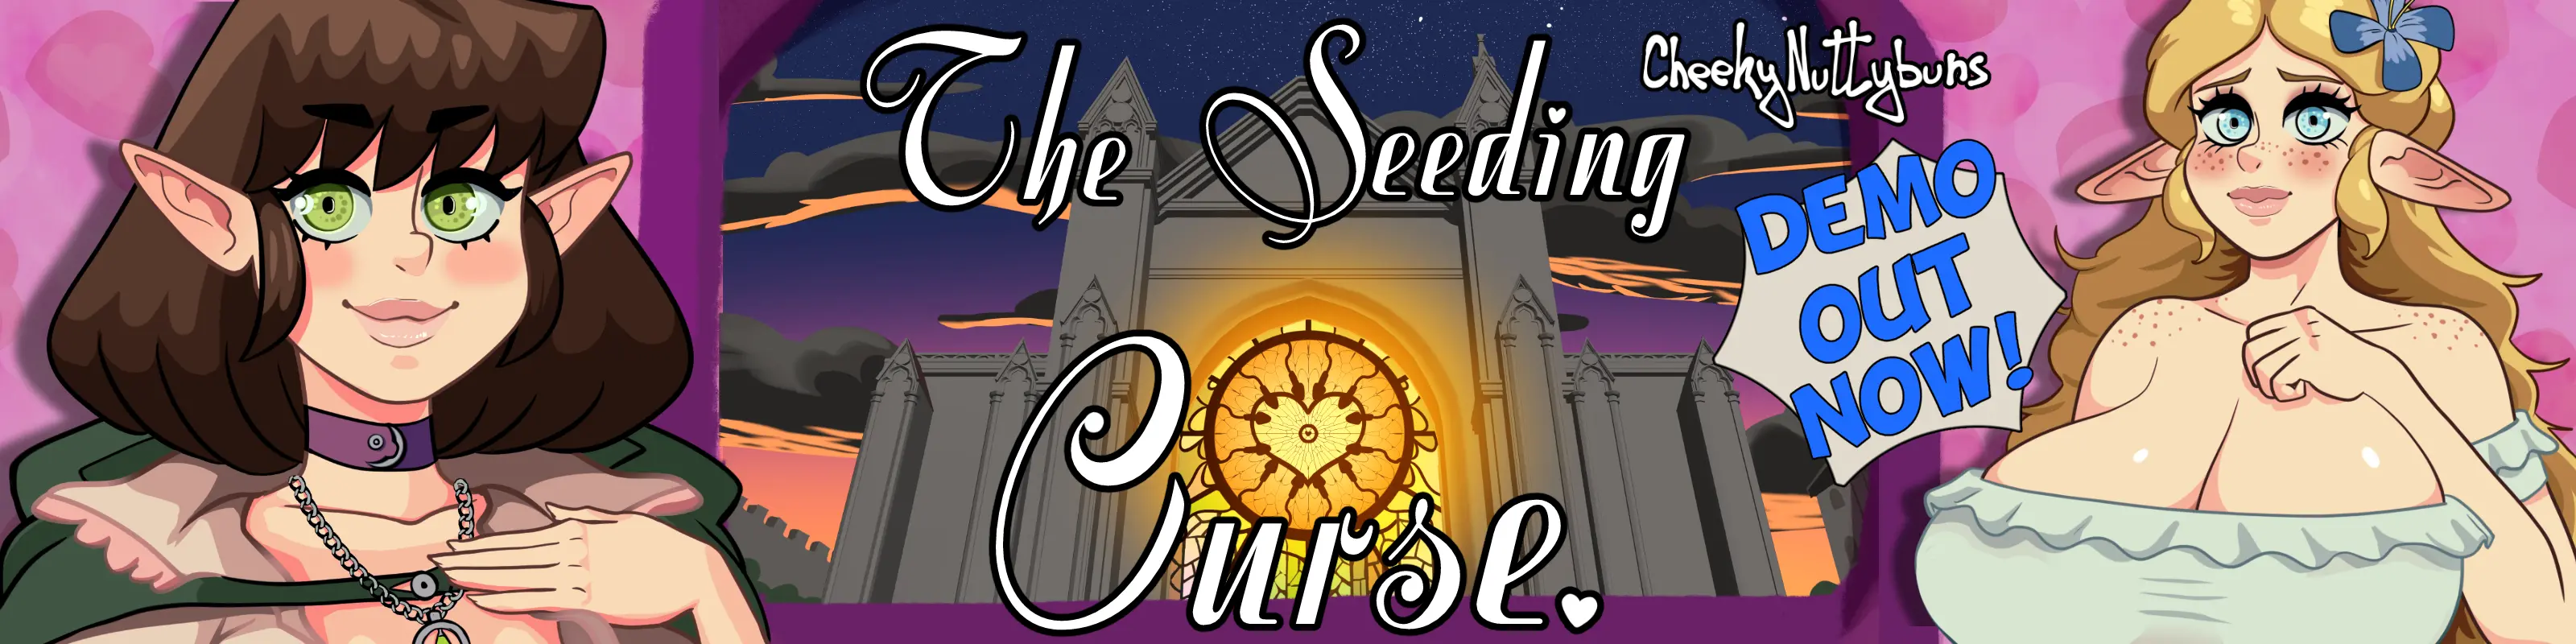 The Seeding Curse main image